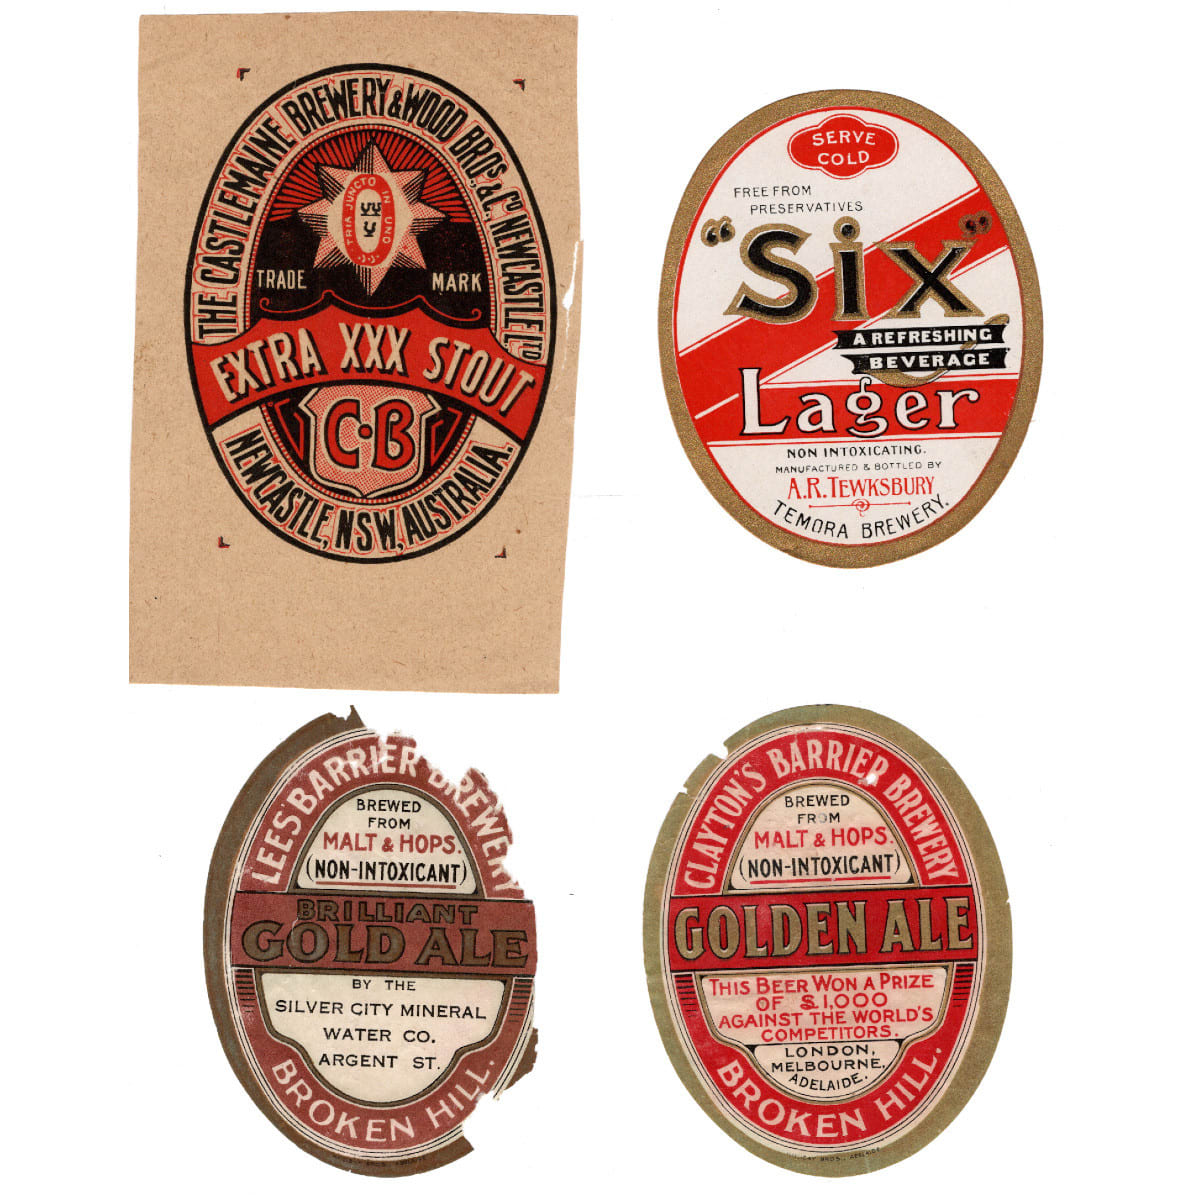 4 Beer Labels: 2 diff Barrier Brewery, Broken Hill; Castlemaine & Wood Bros, Newcastle; Tewksbury, Temora Brewery. (New South Wales)